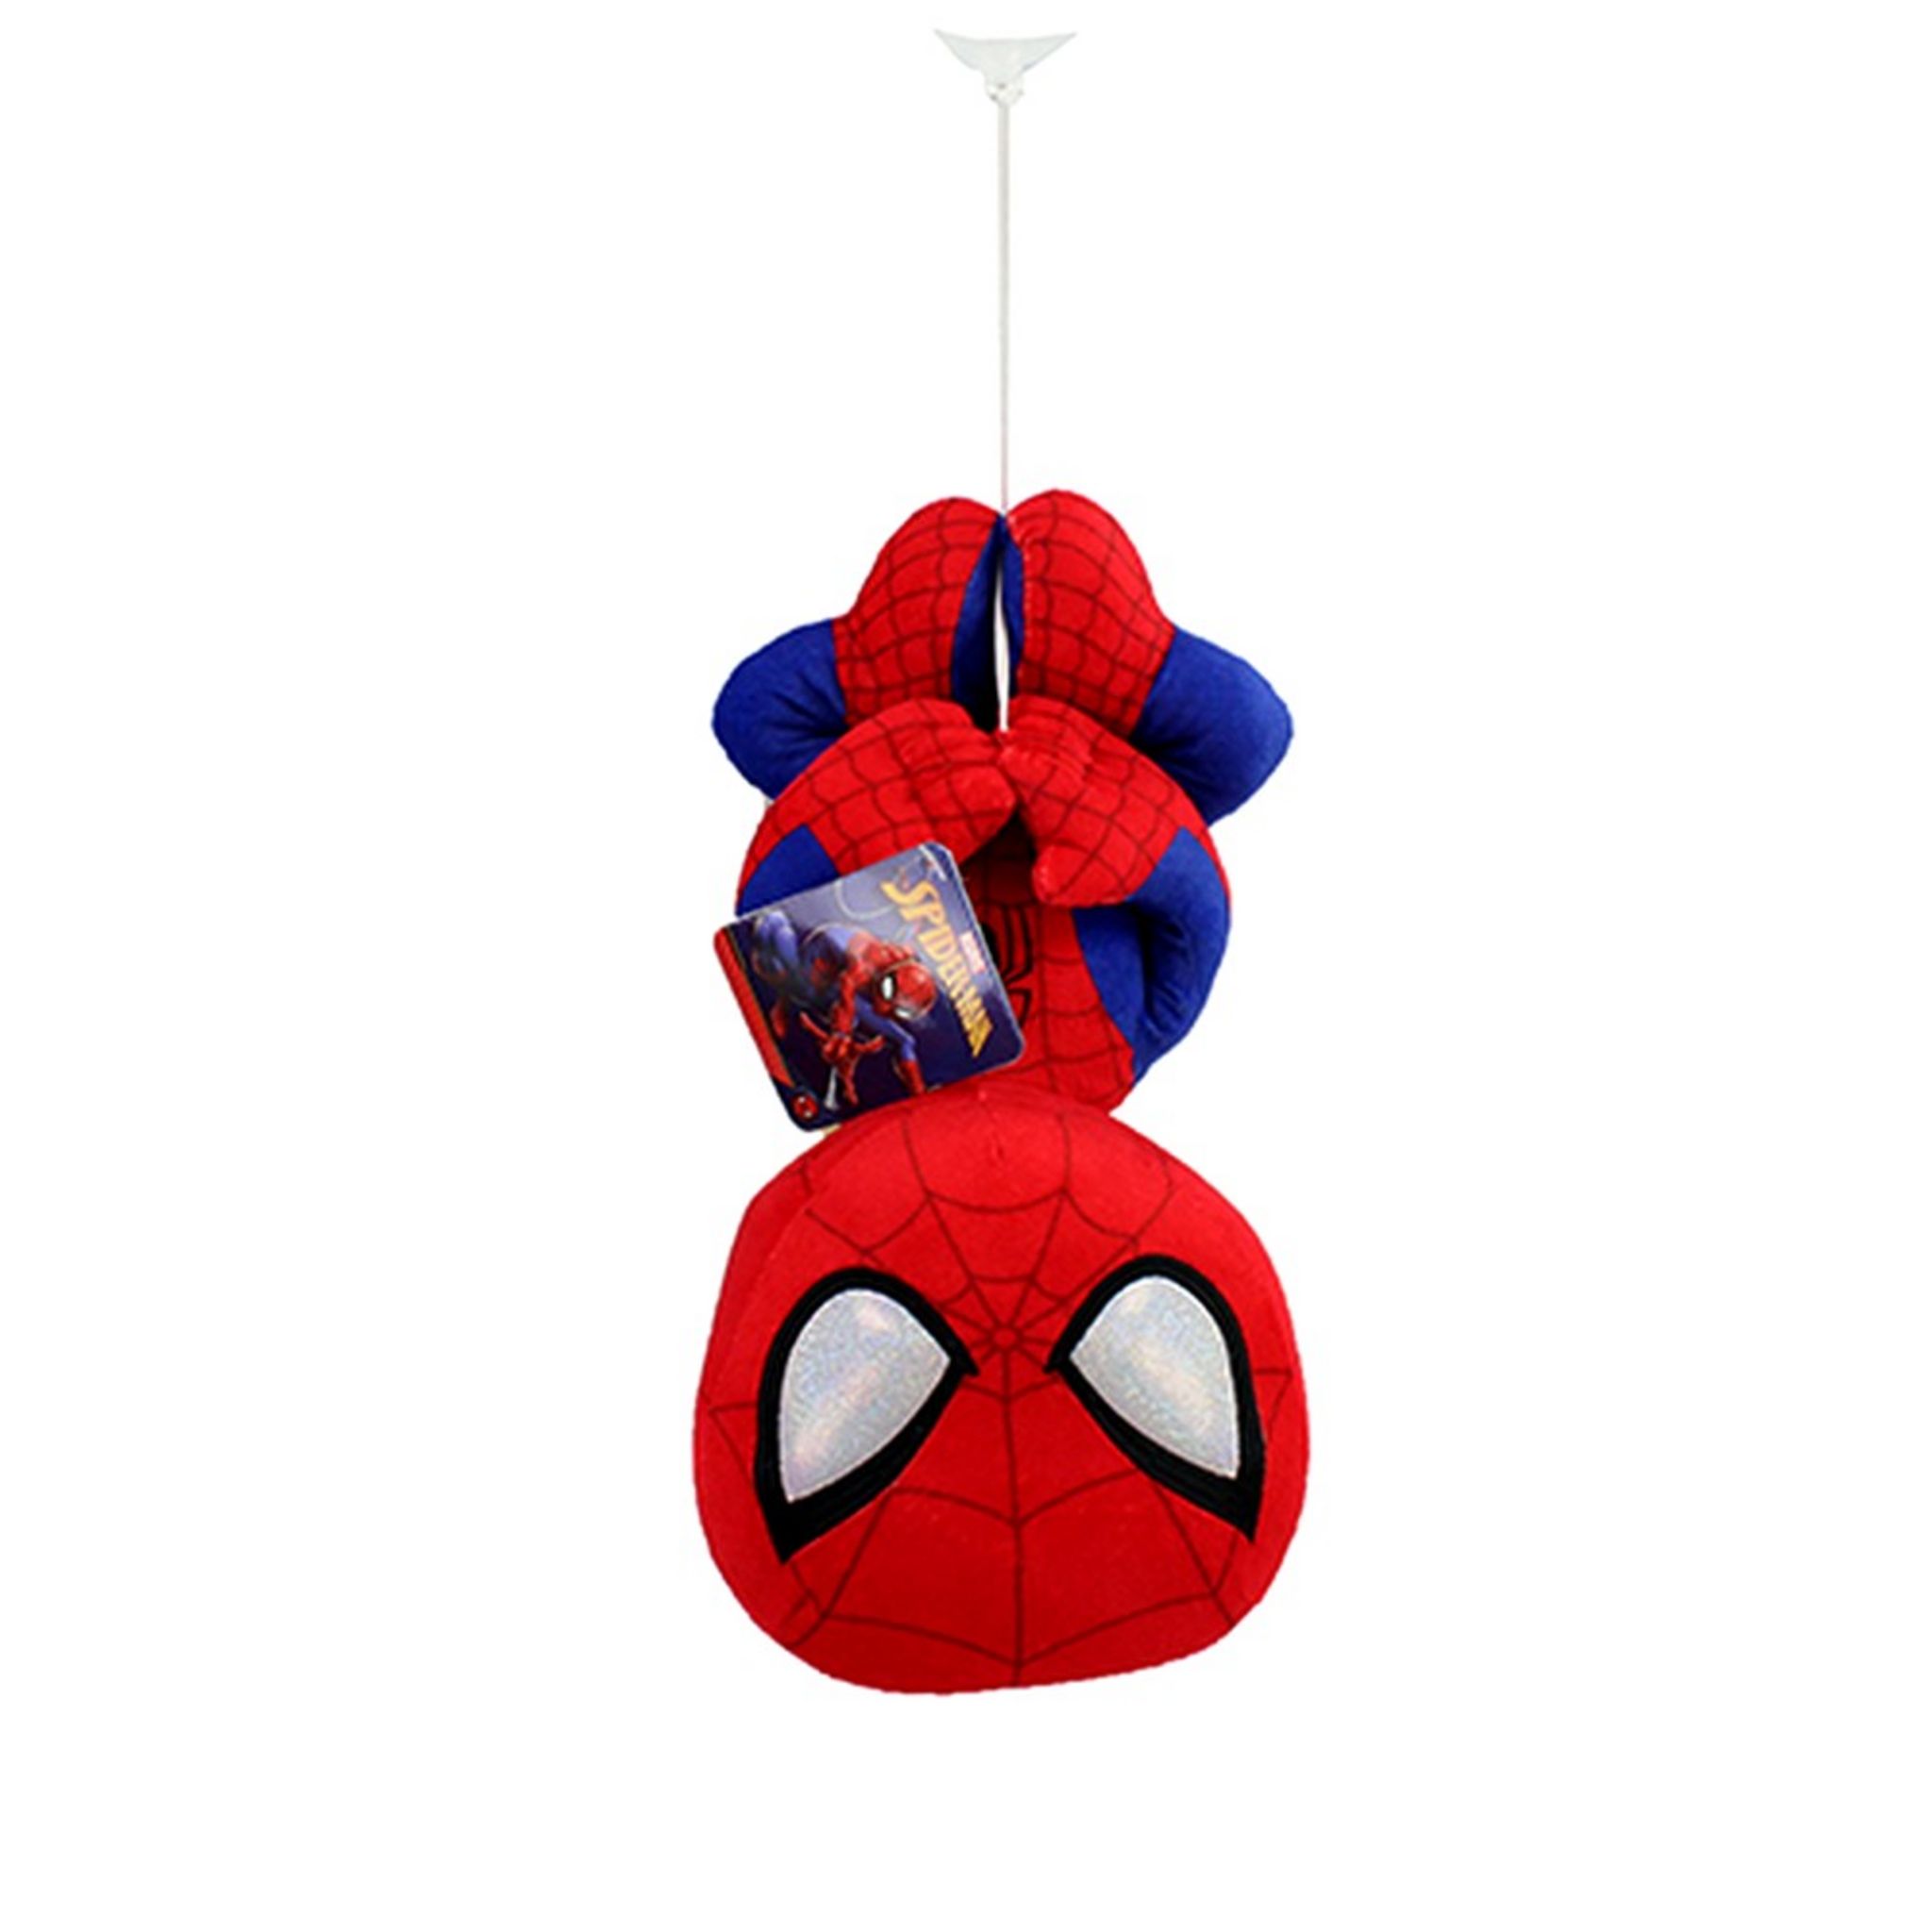 Acheter Peluche Marvel Spiderman Bleu ? Bon et bon marché